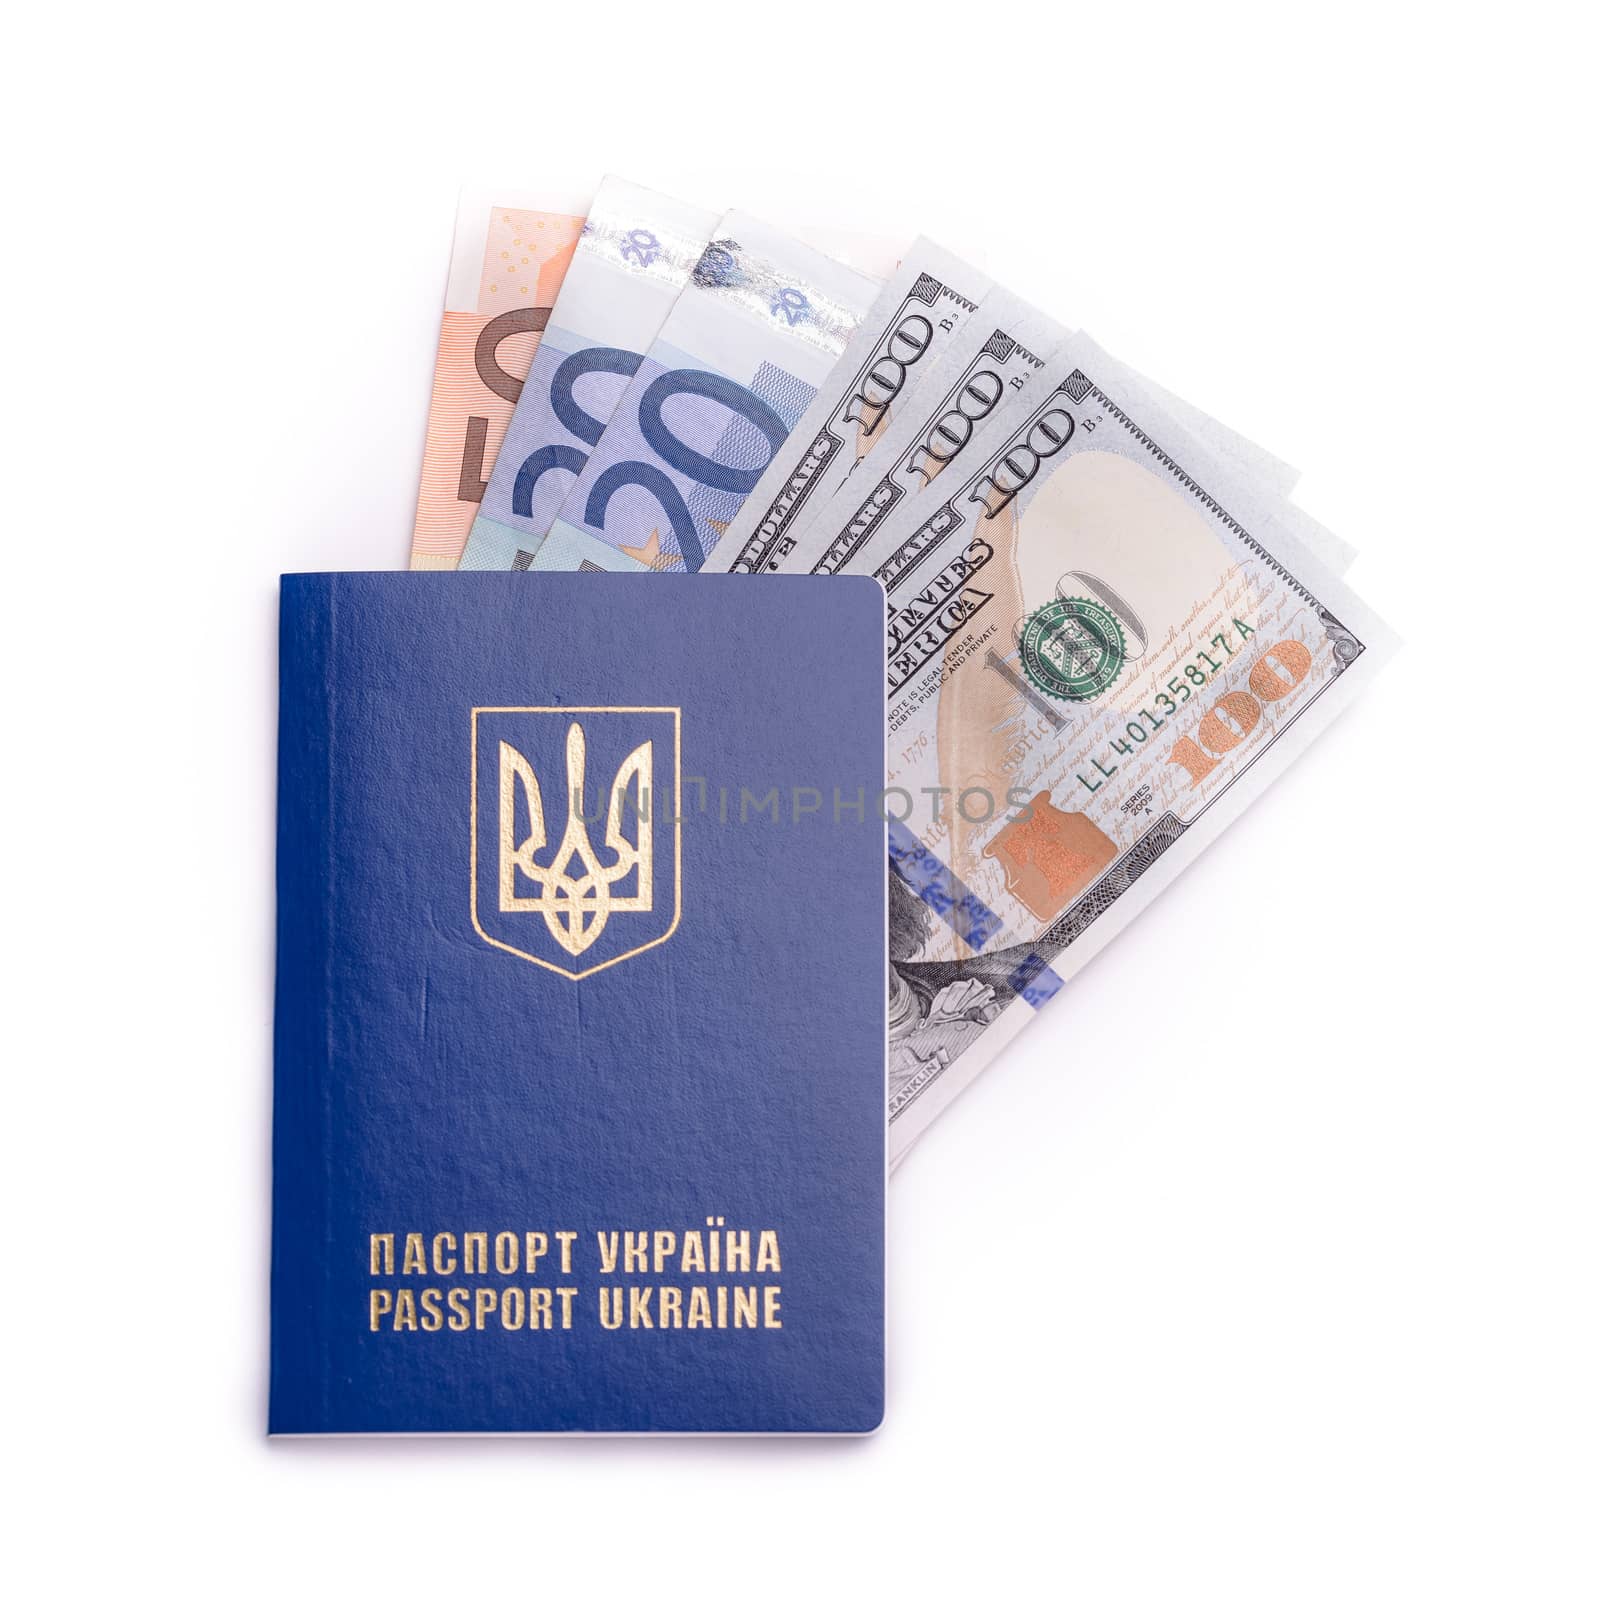 Ukrainian International Passport With Banknotes by MaxalTamor